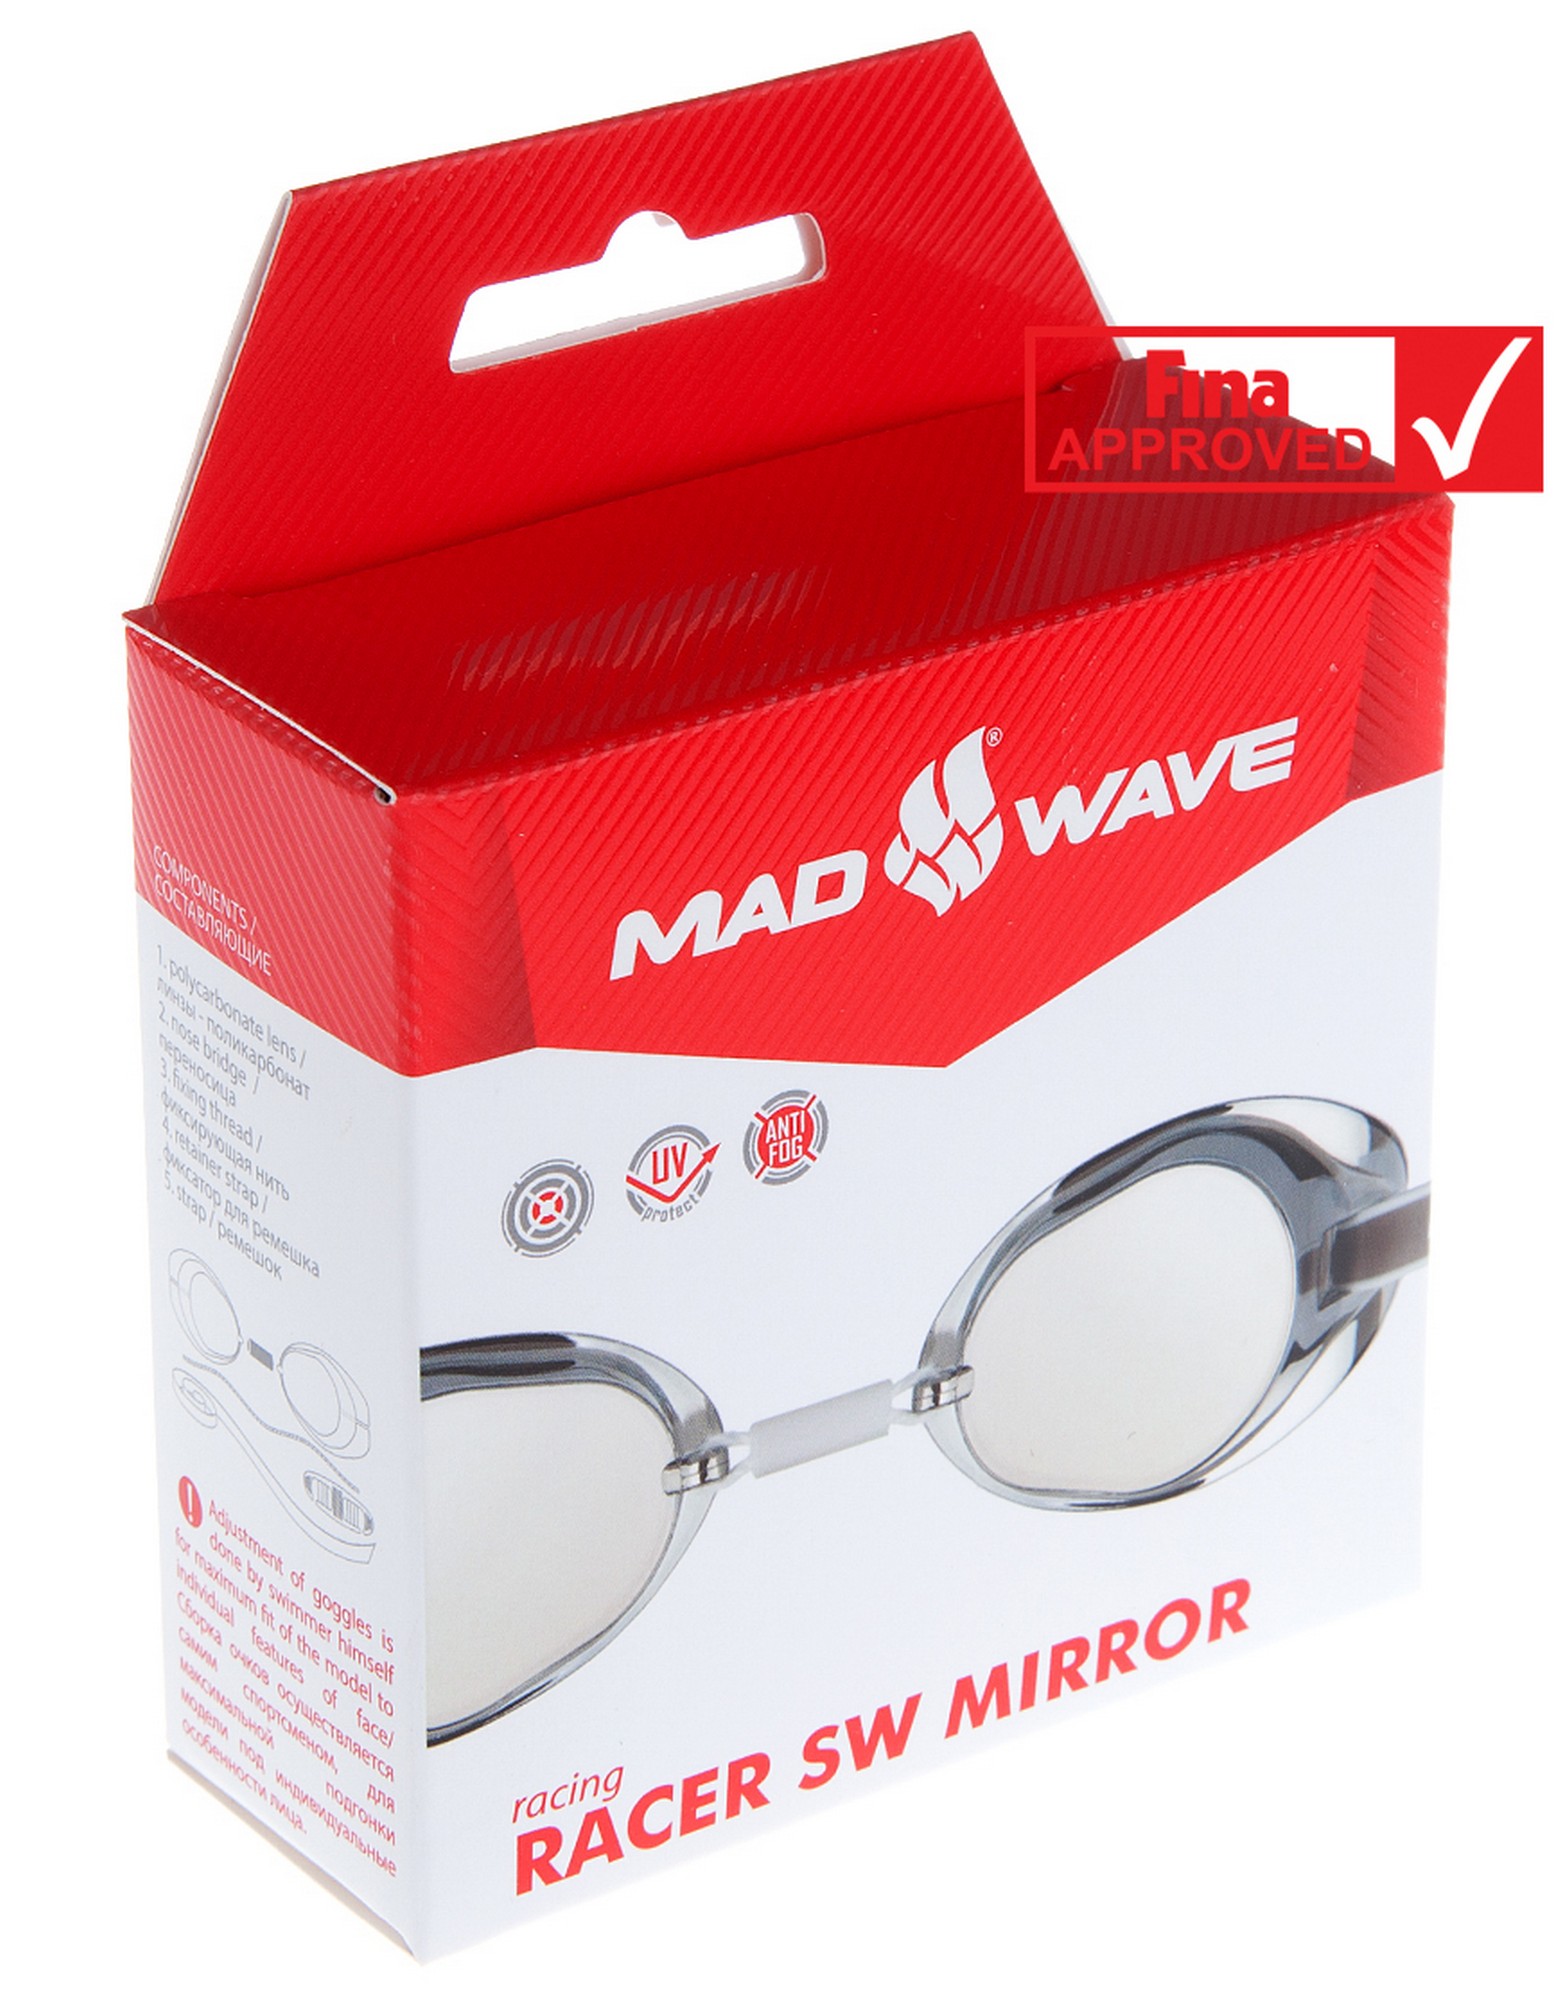 Стартовые очки Mad Wave Racer SW Mirror M0455 02 0 06W 1561_2000